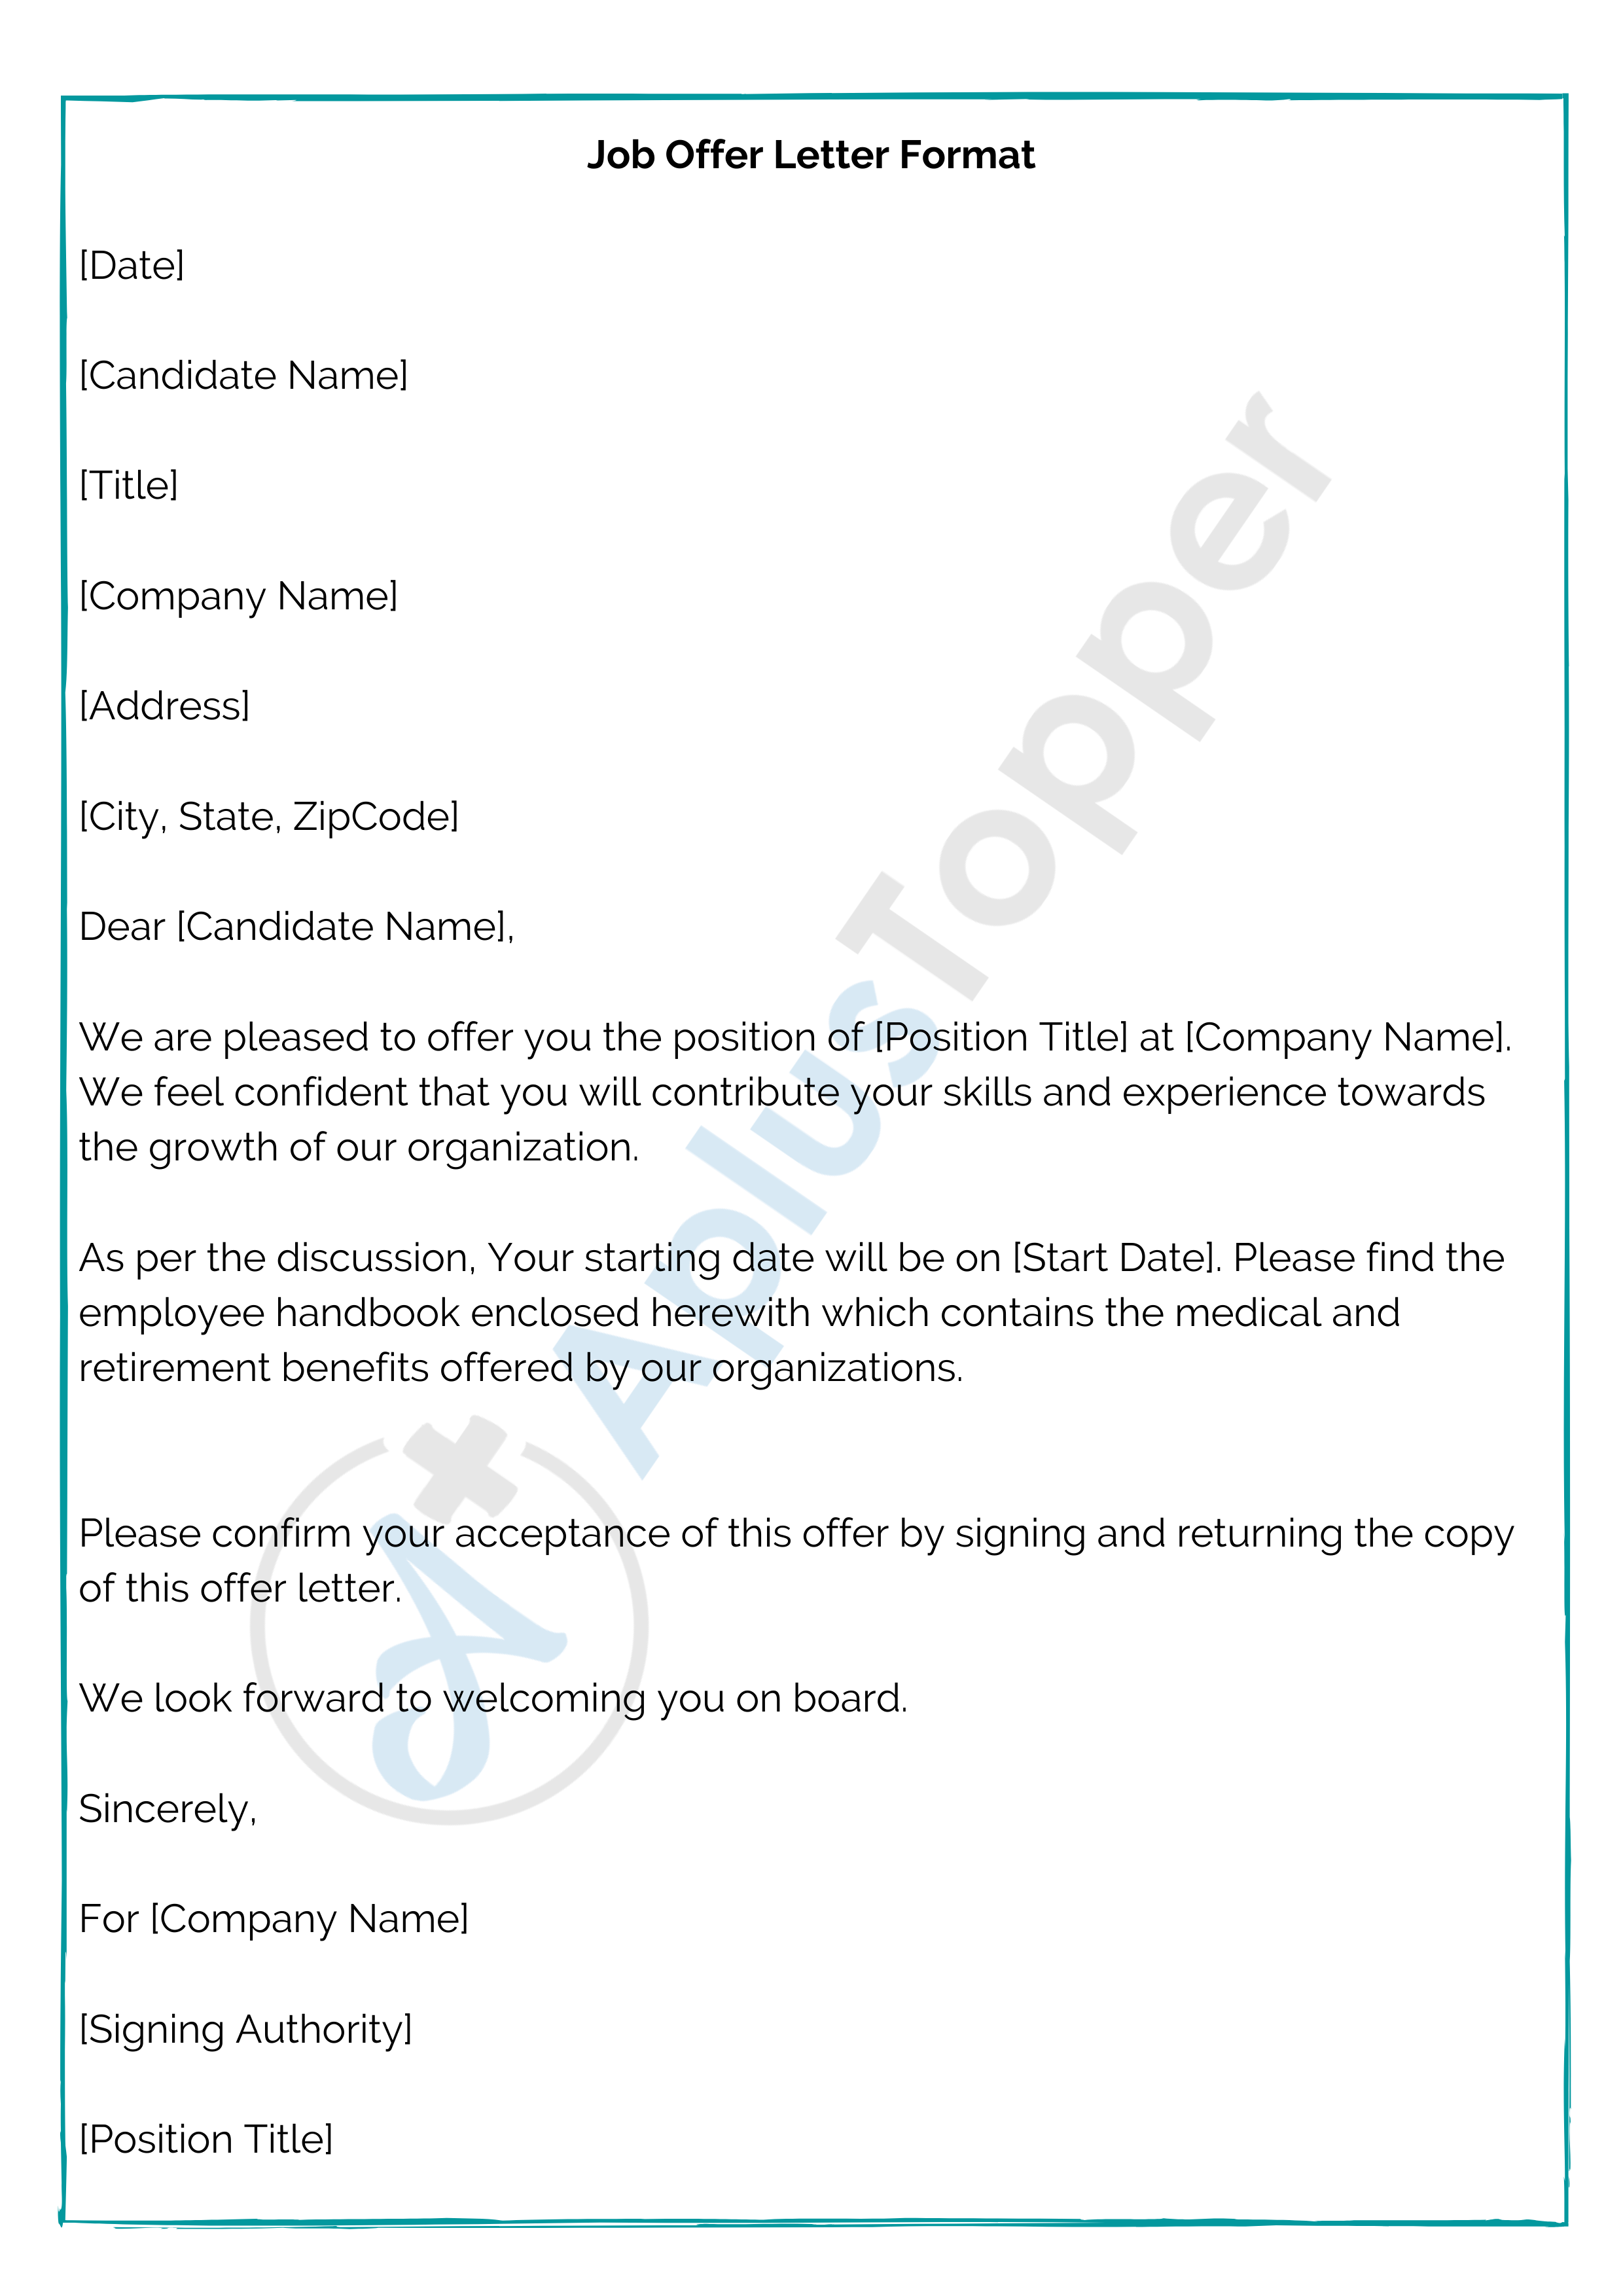 Job Offer Letter Format